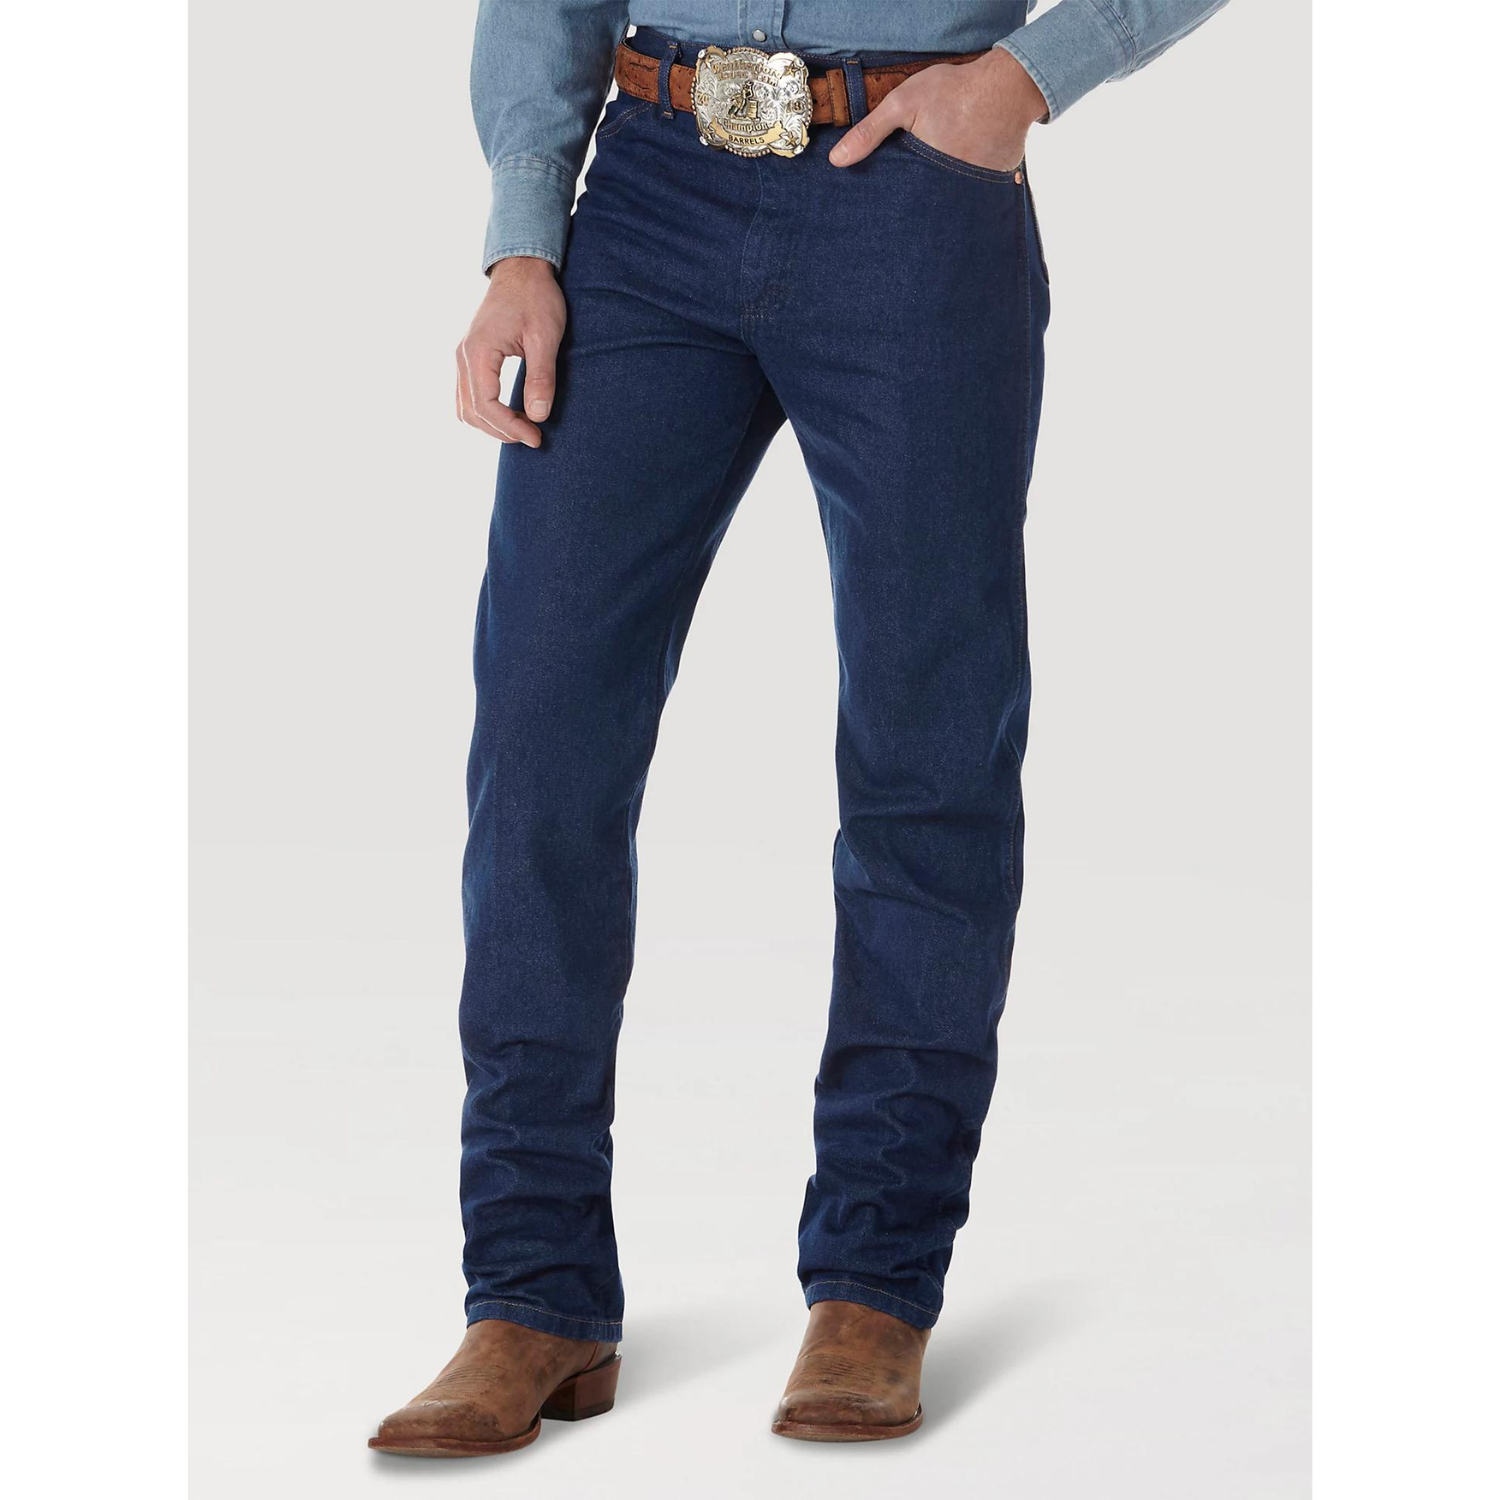 Wrangler Men's Original Cowboy Cut Jeans - 36 Leg Length (13MWZ)